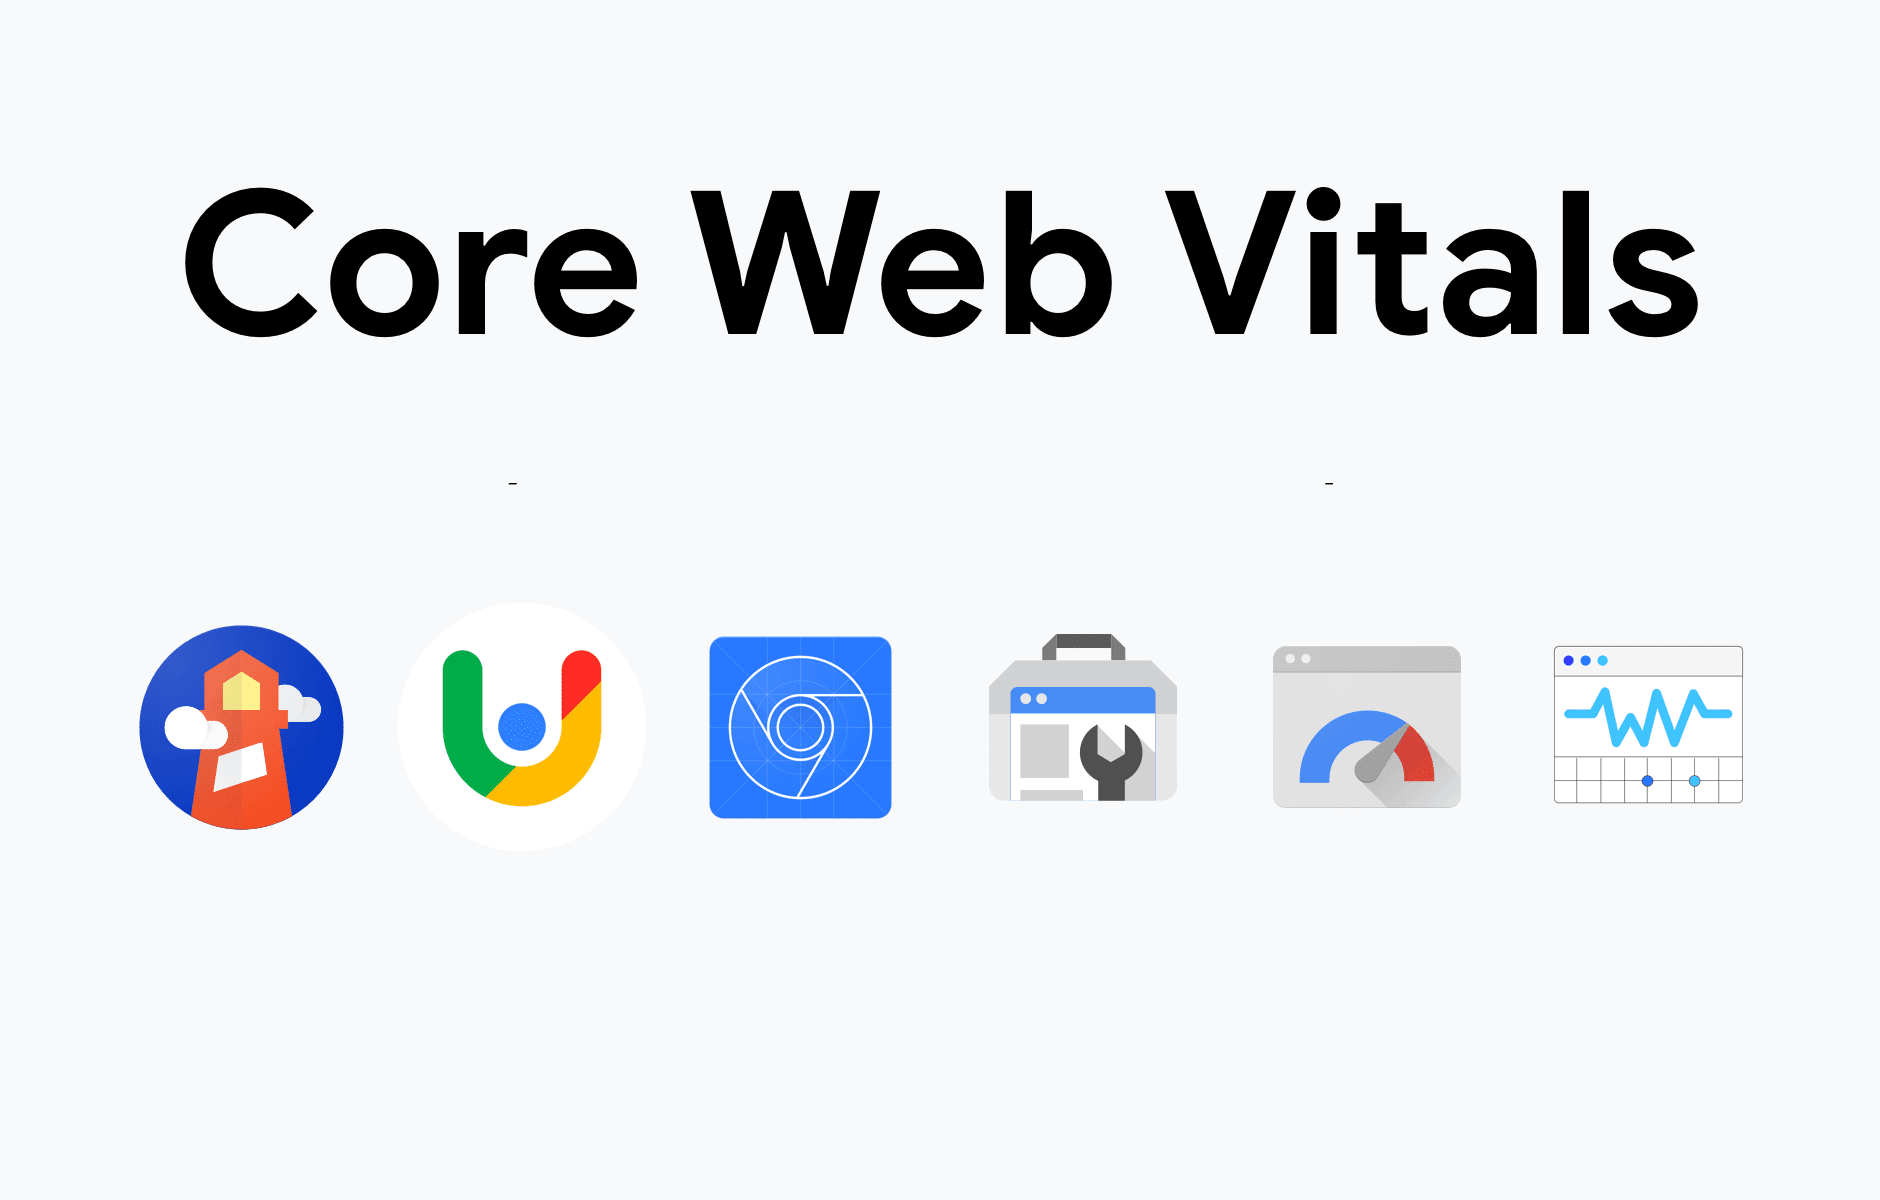 Core Web Vitals inscription and Google icons